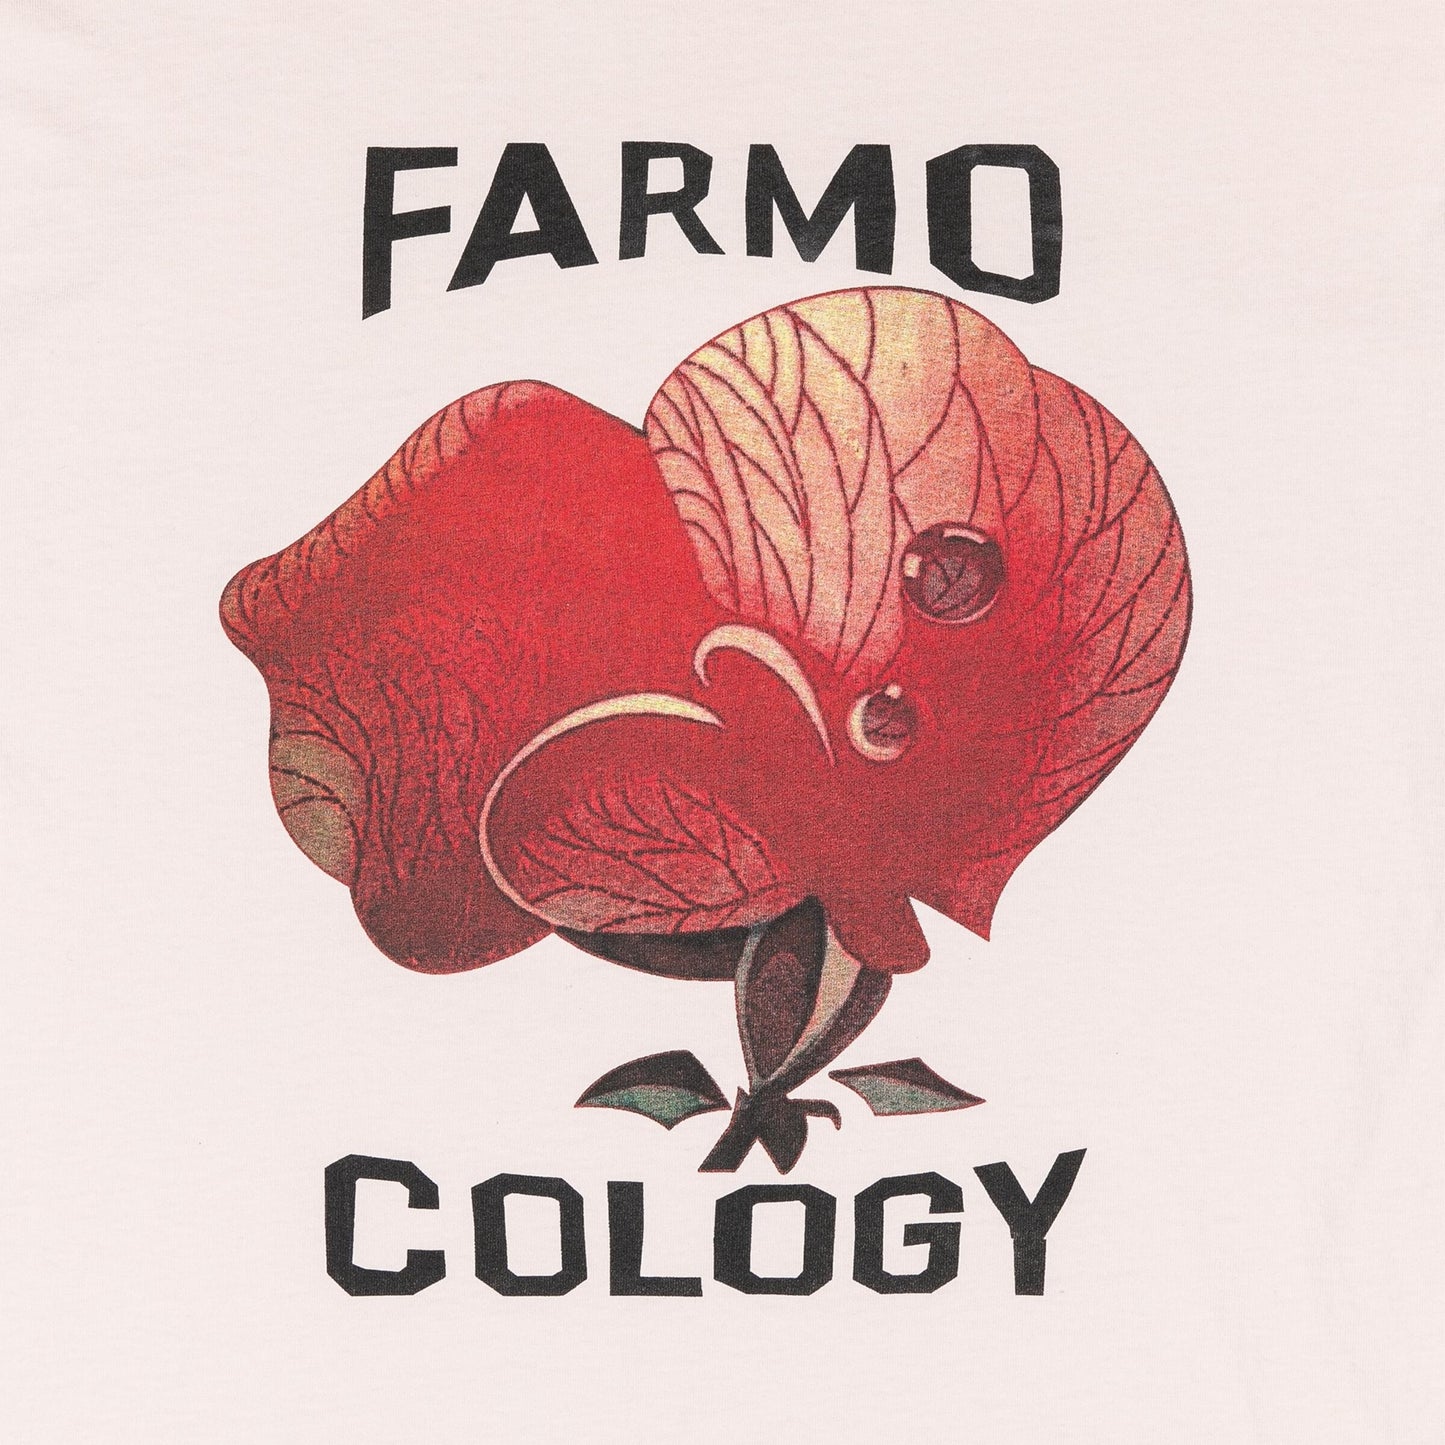 Farmo Cology Tee - Light Khaki